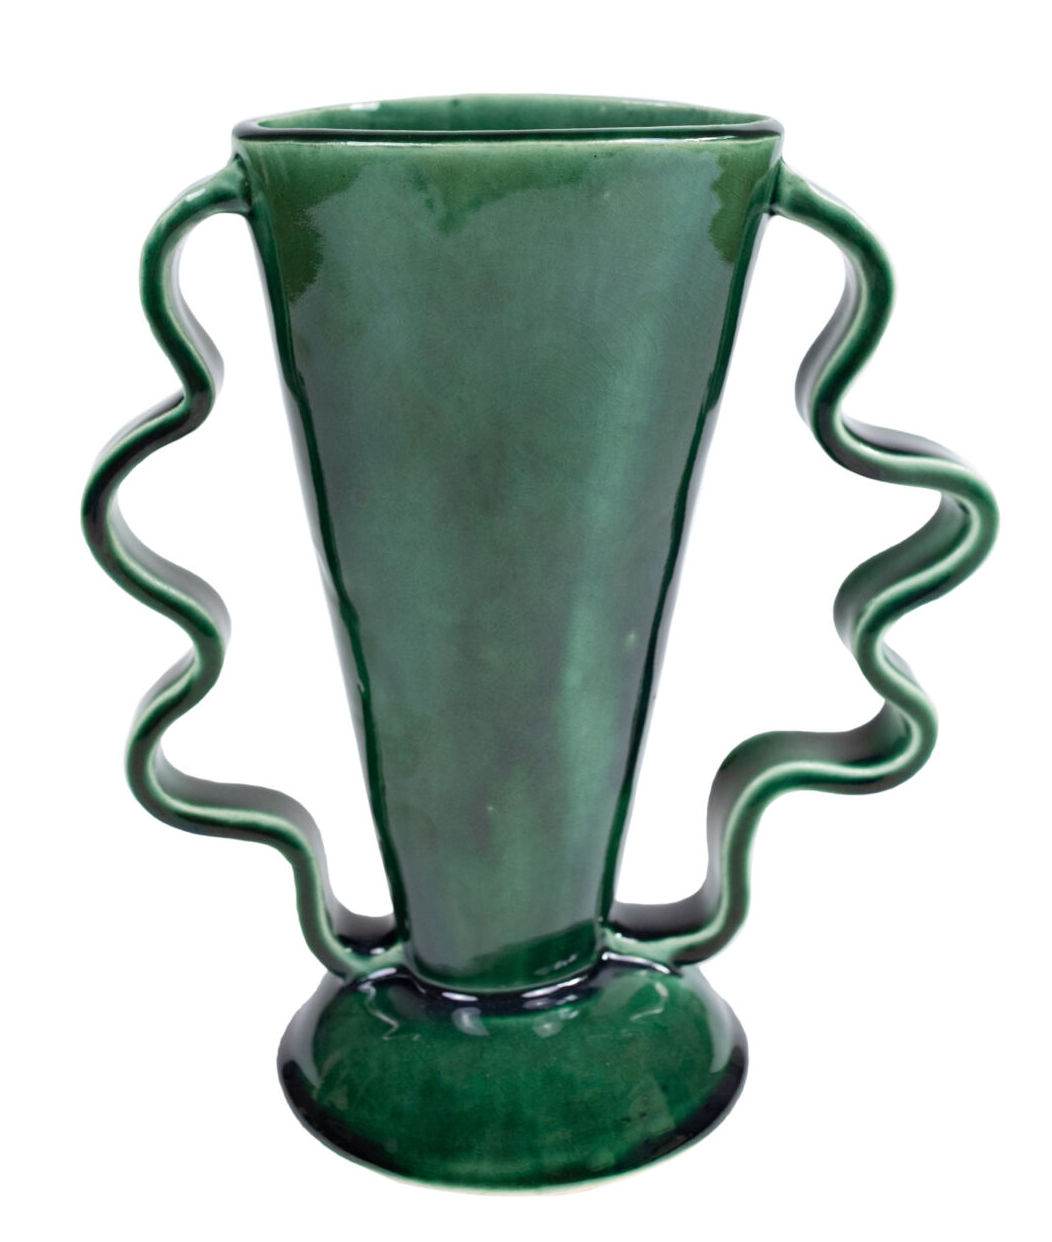 An emerald ceramic vase has squiggly handles.